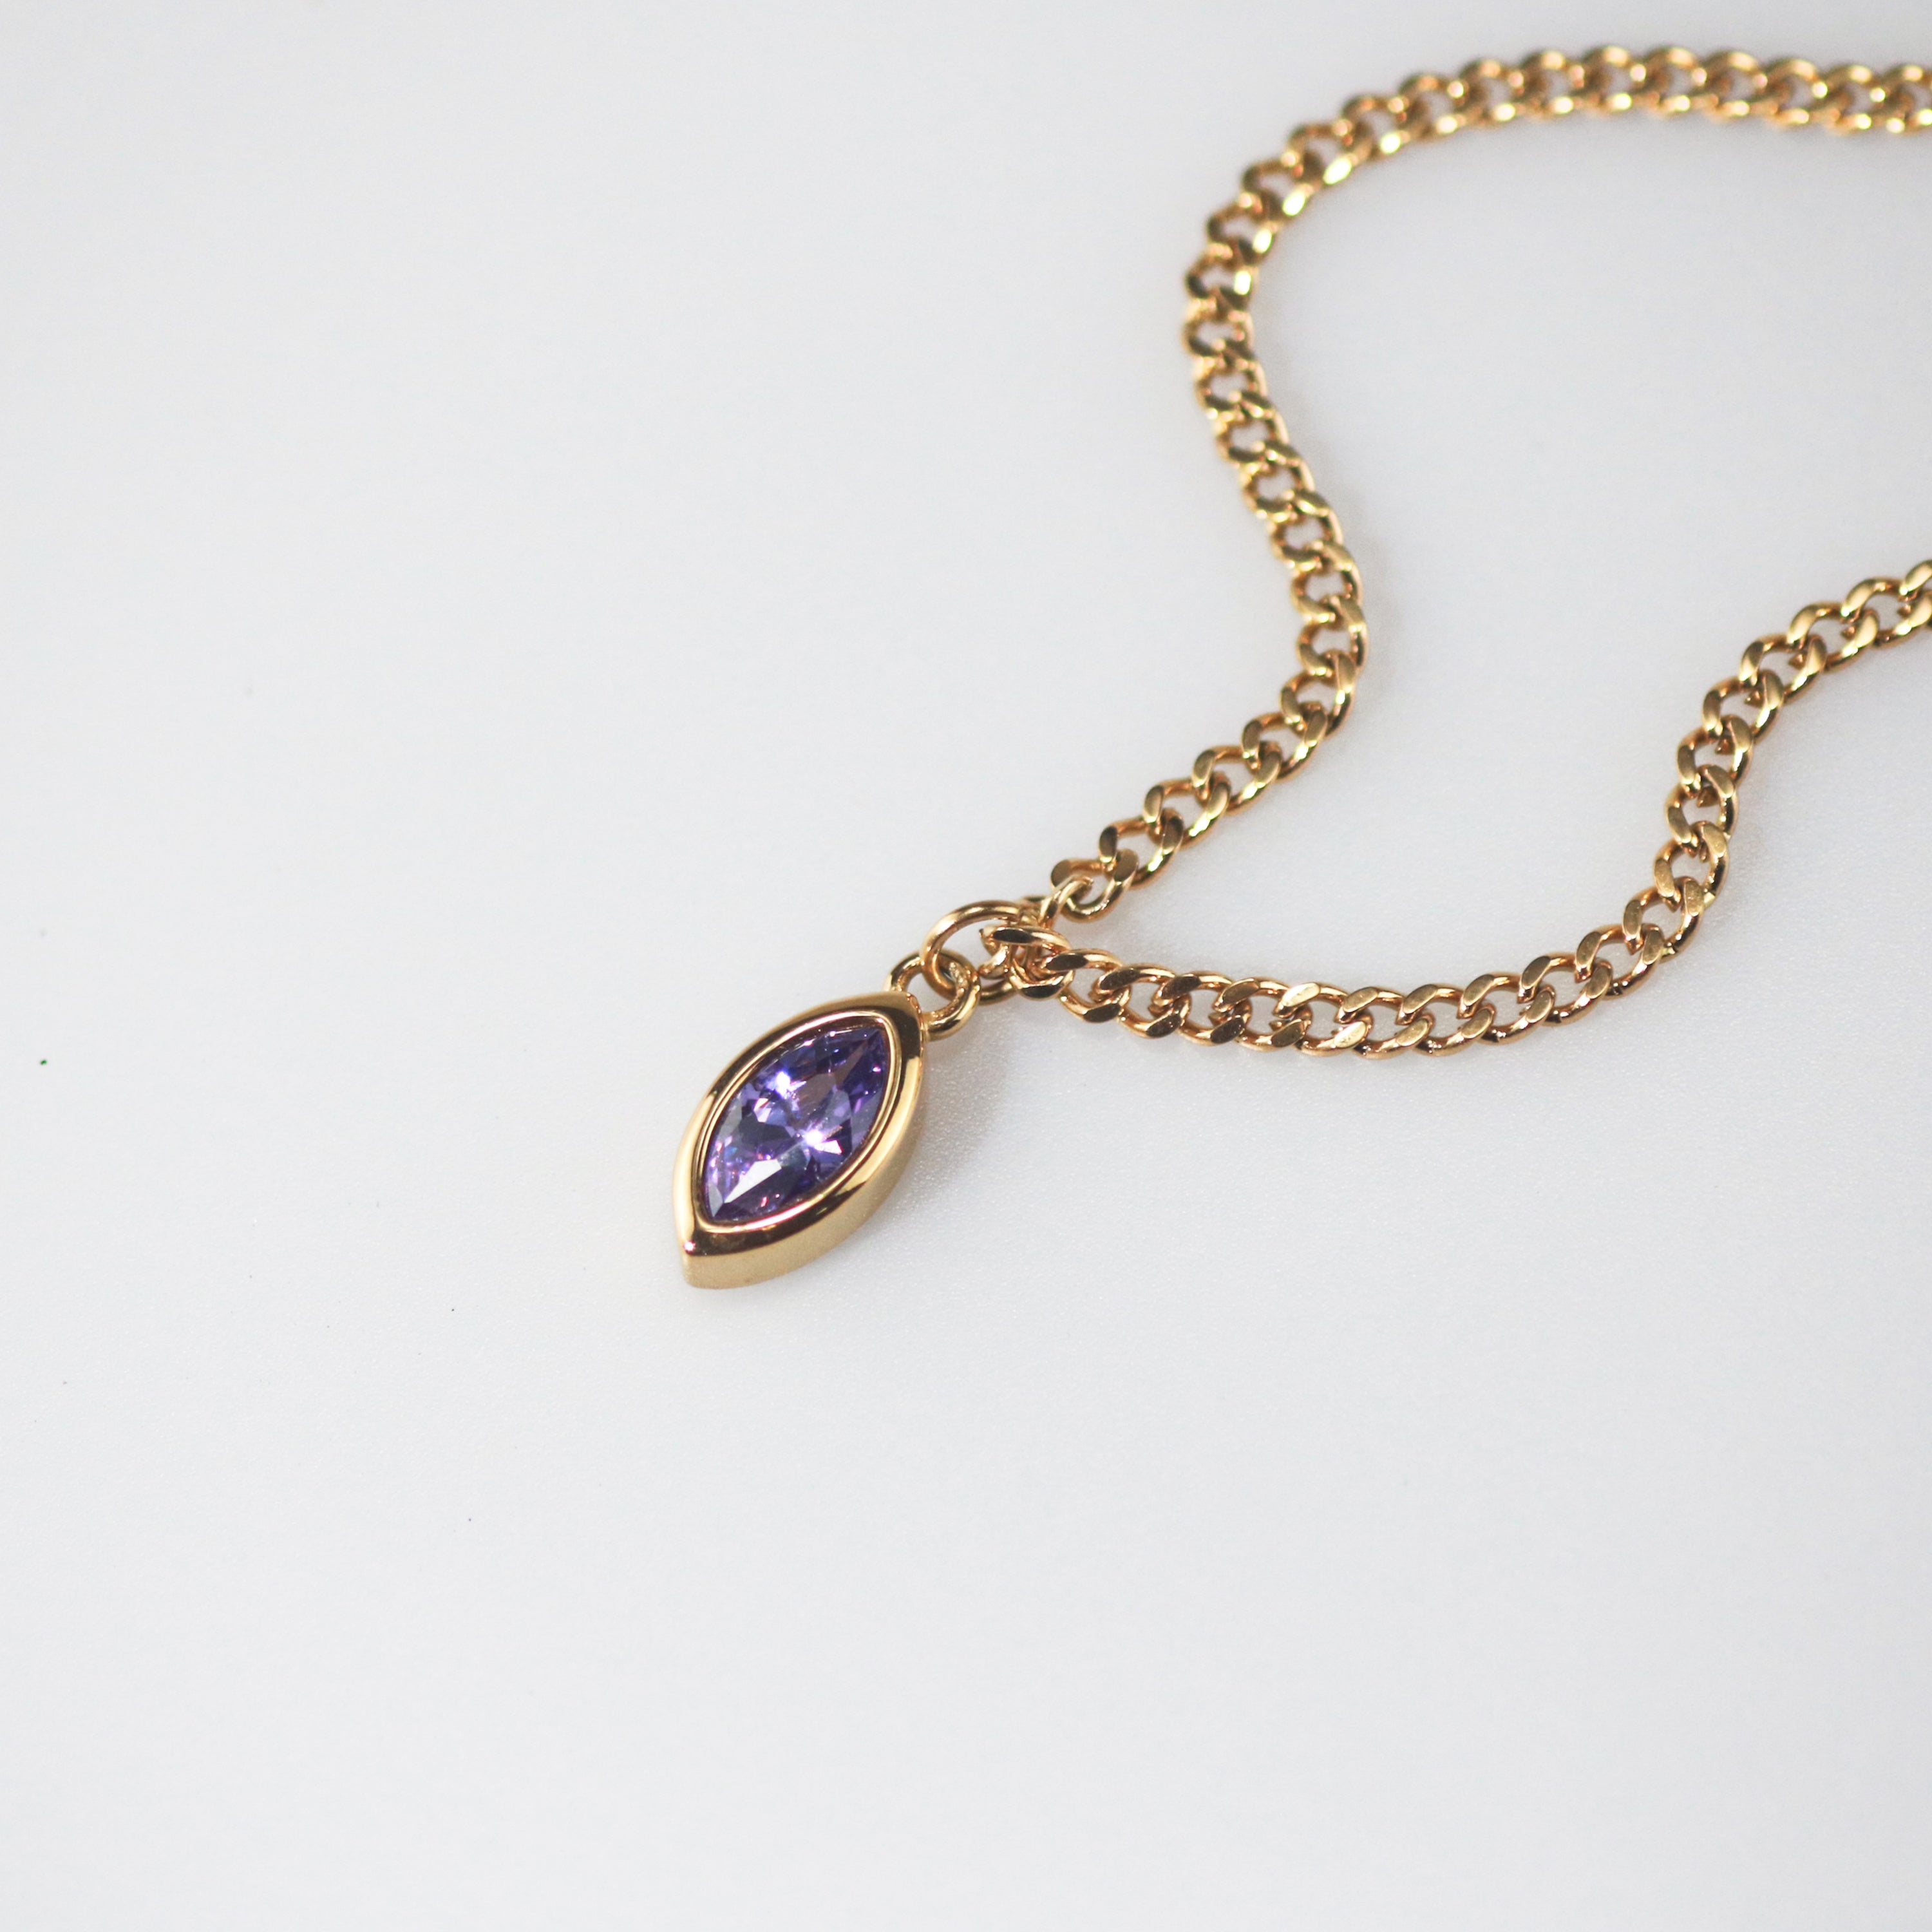 Meideya Jewelry Amythest Marequise Pendant Necklace